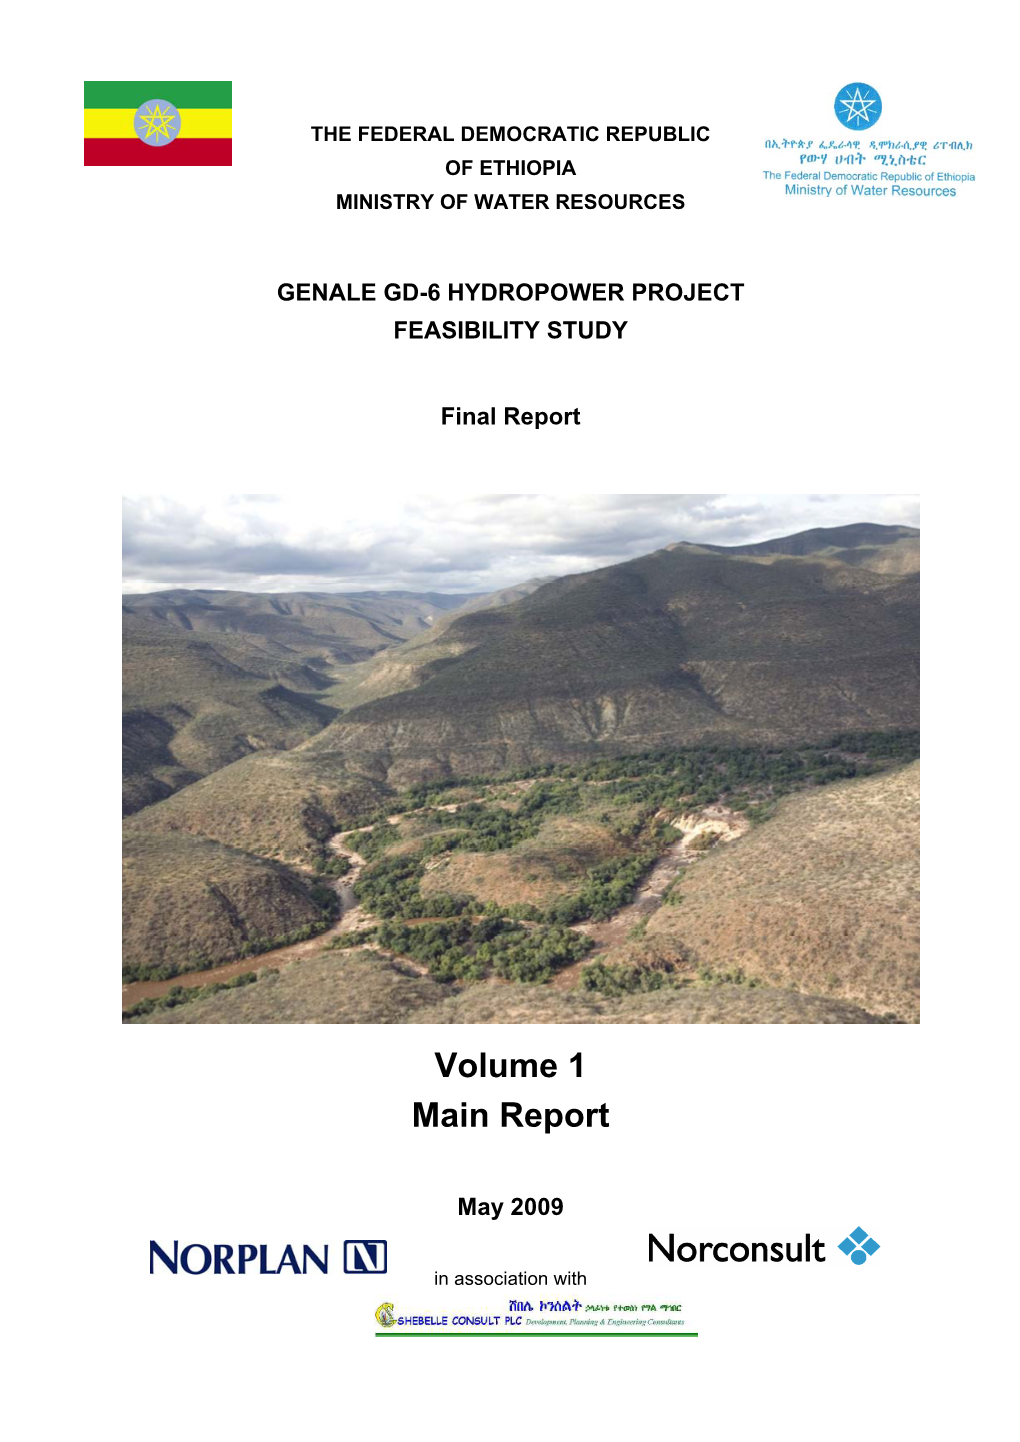 Volume 1 Main Report